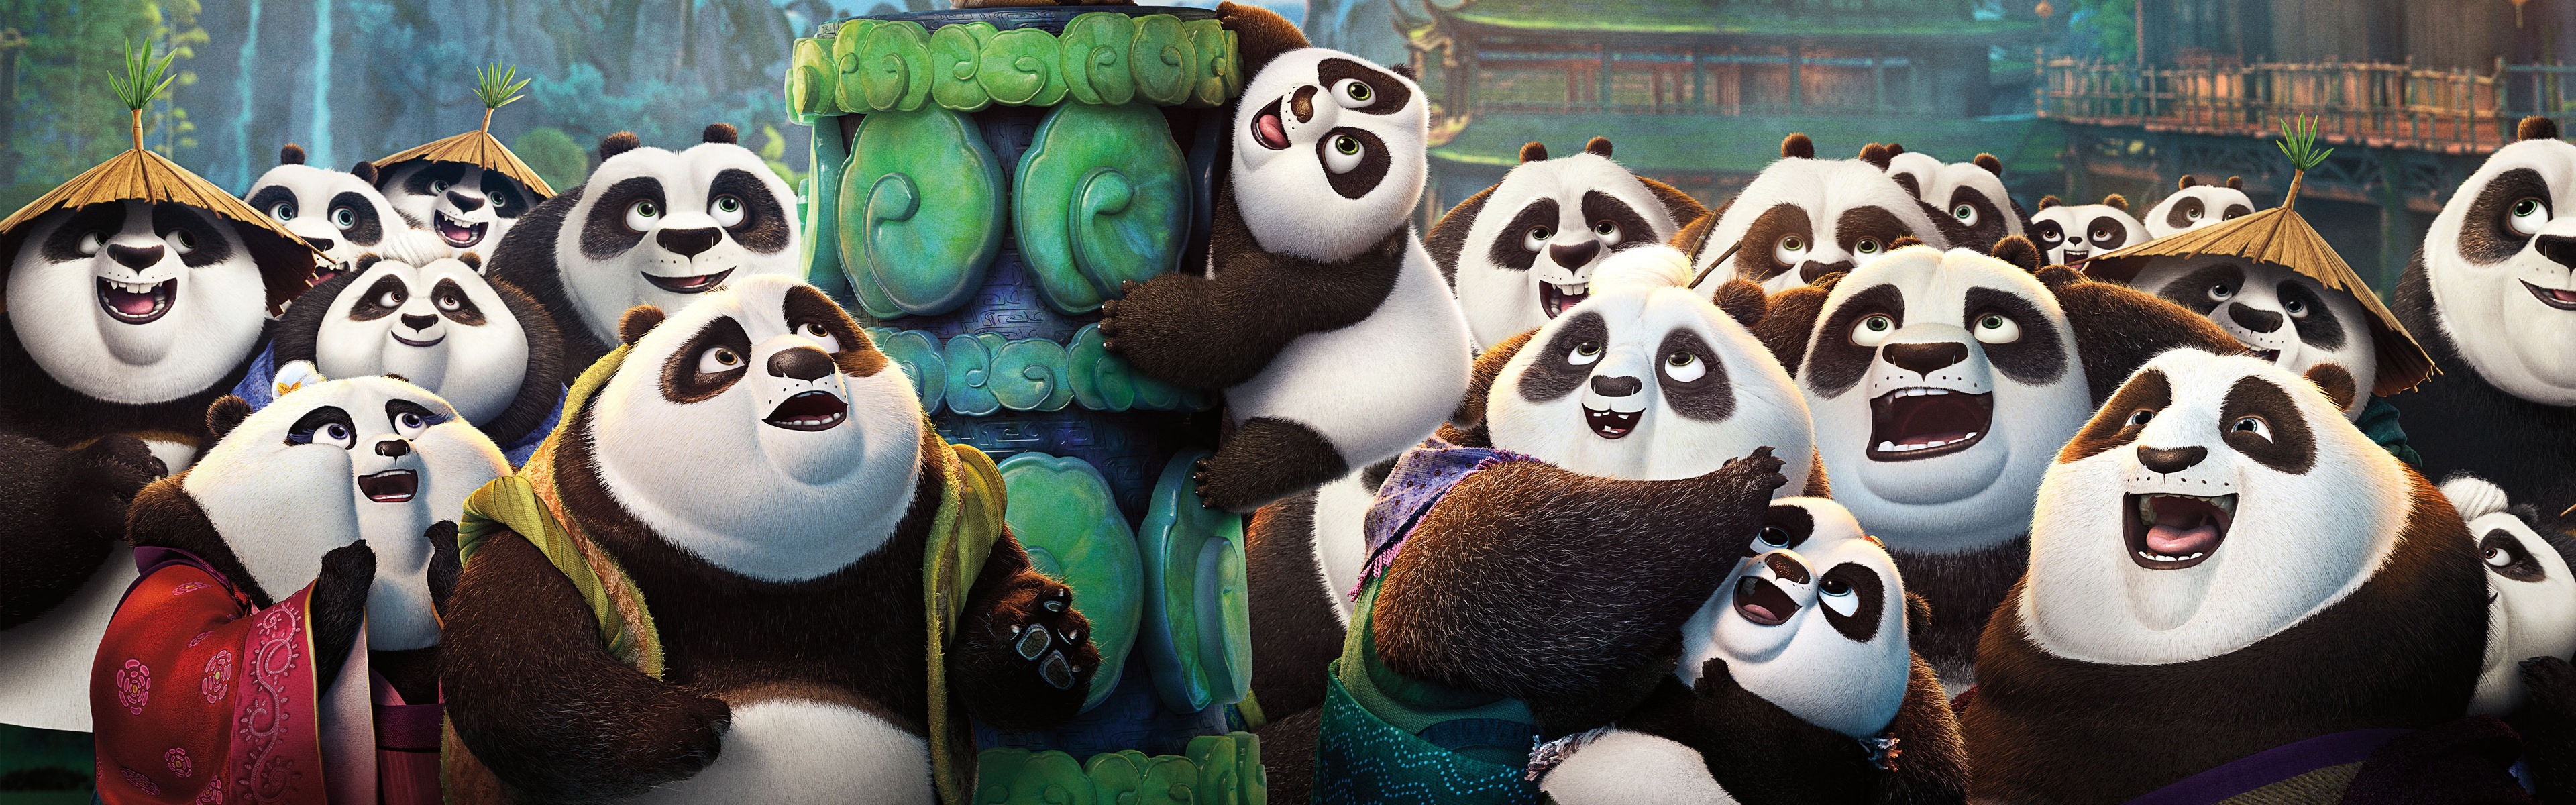 Kung Fu Panda 3, HD movie wallpapers #7 - 3840x1200